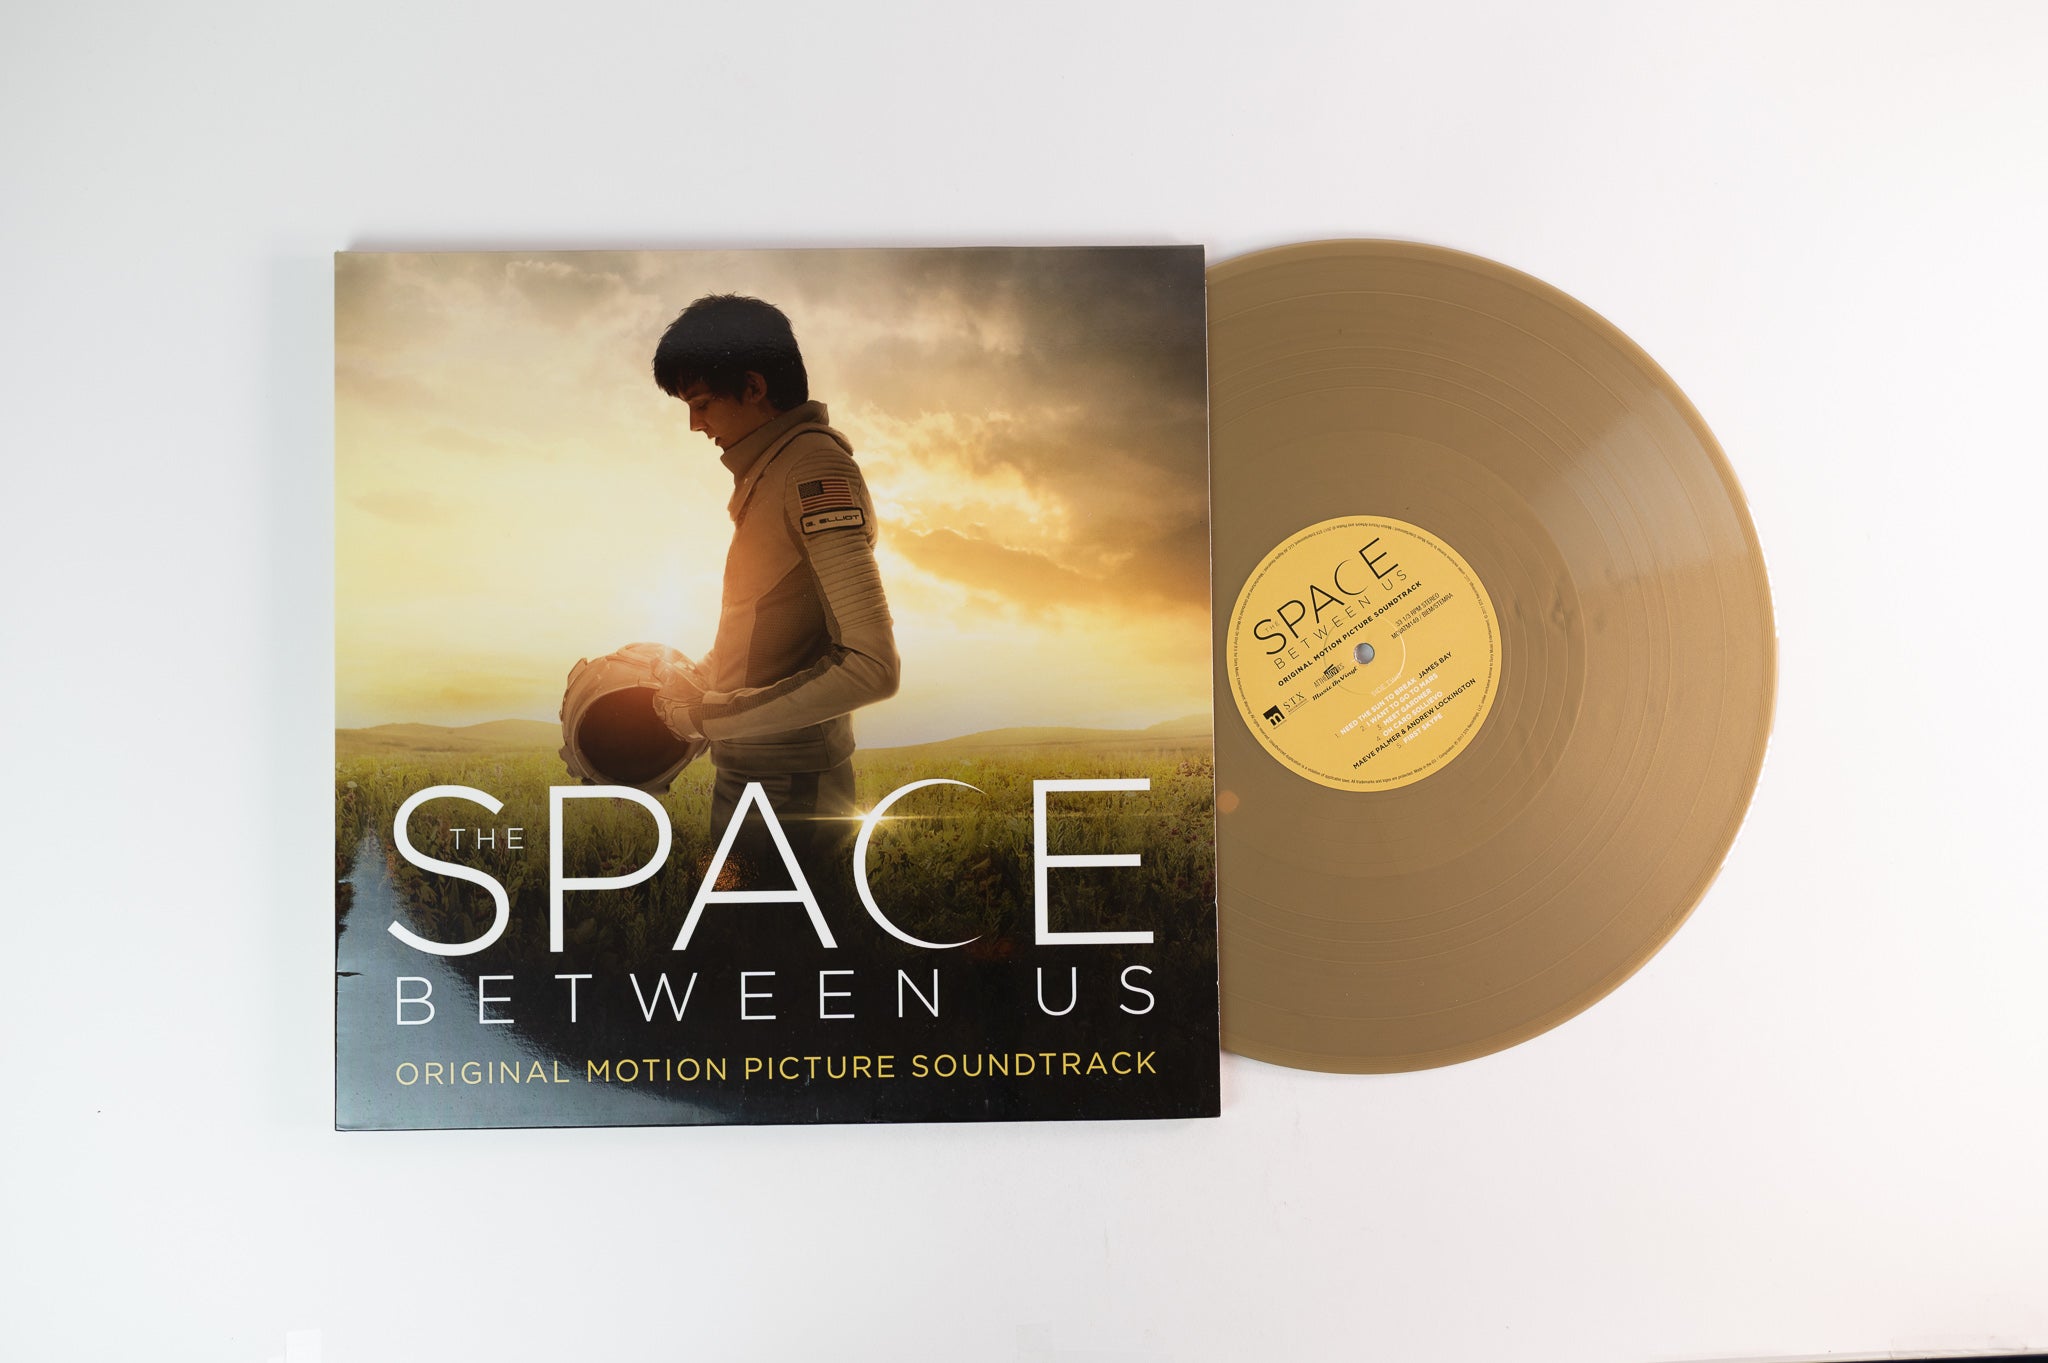 Andrew Lockington - The Space Between Us on Music On Vinyl - Gold Vinyl